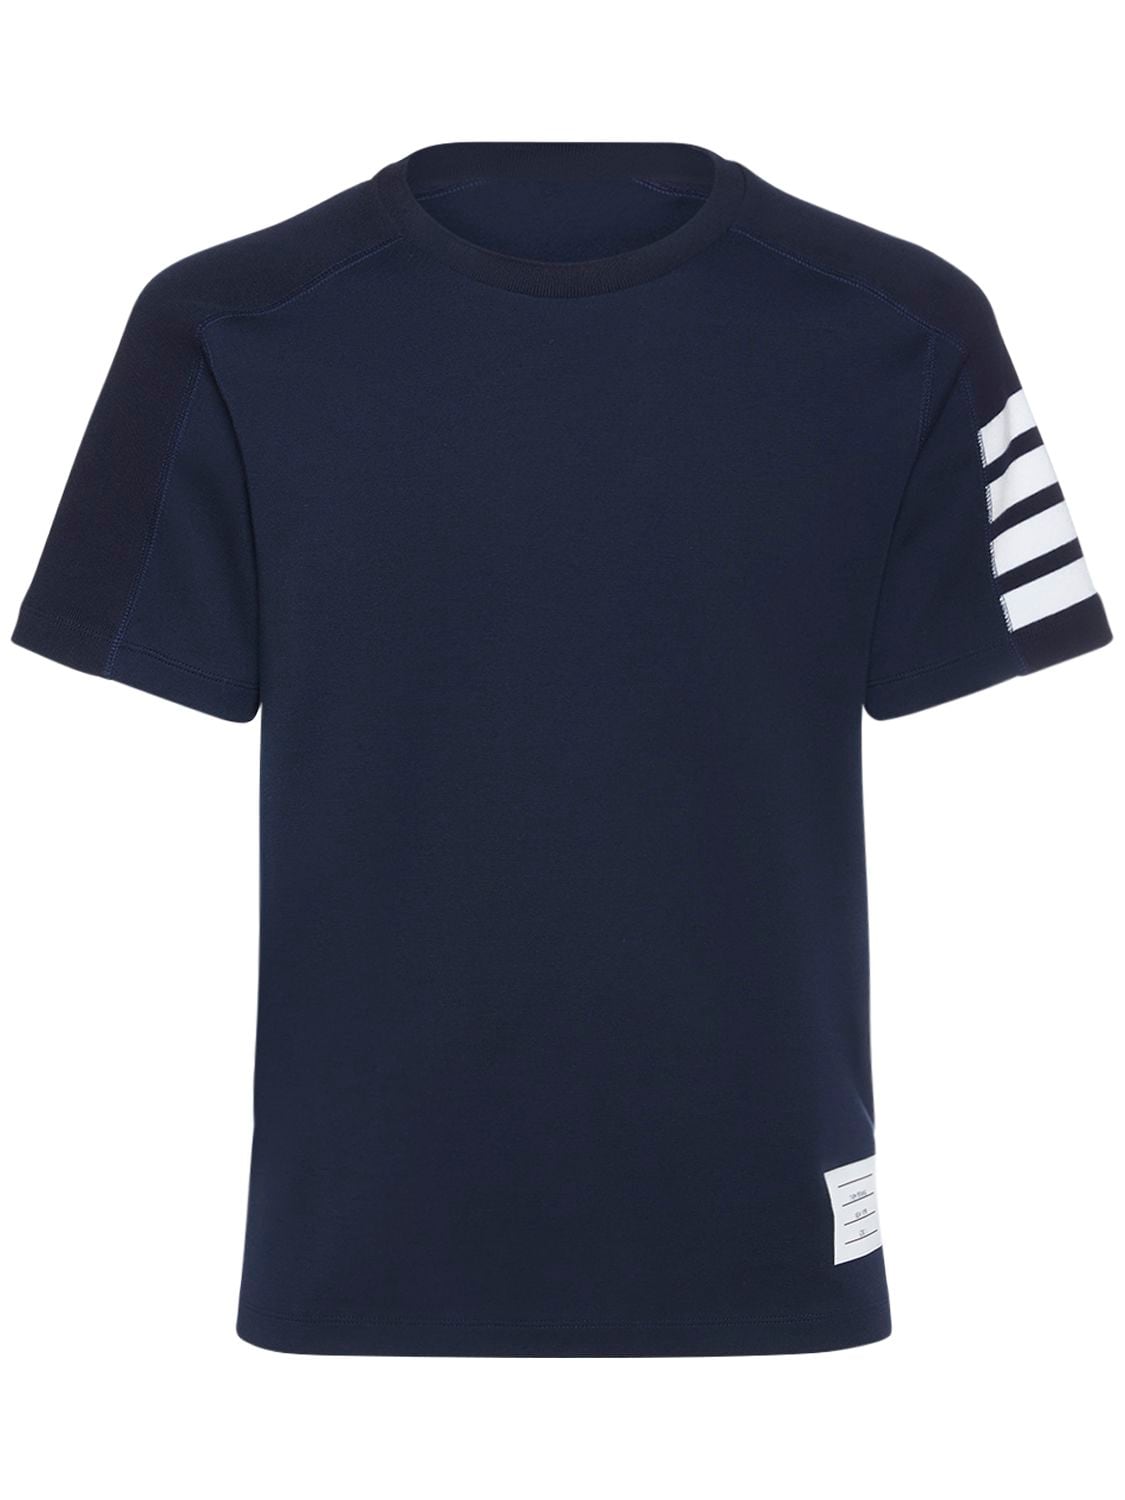 Image of Cotton Ss T-shirt W/ 4 Bar Stripe